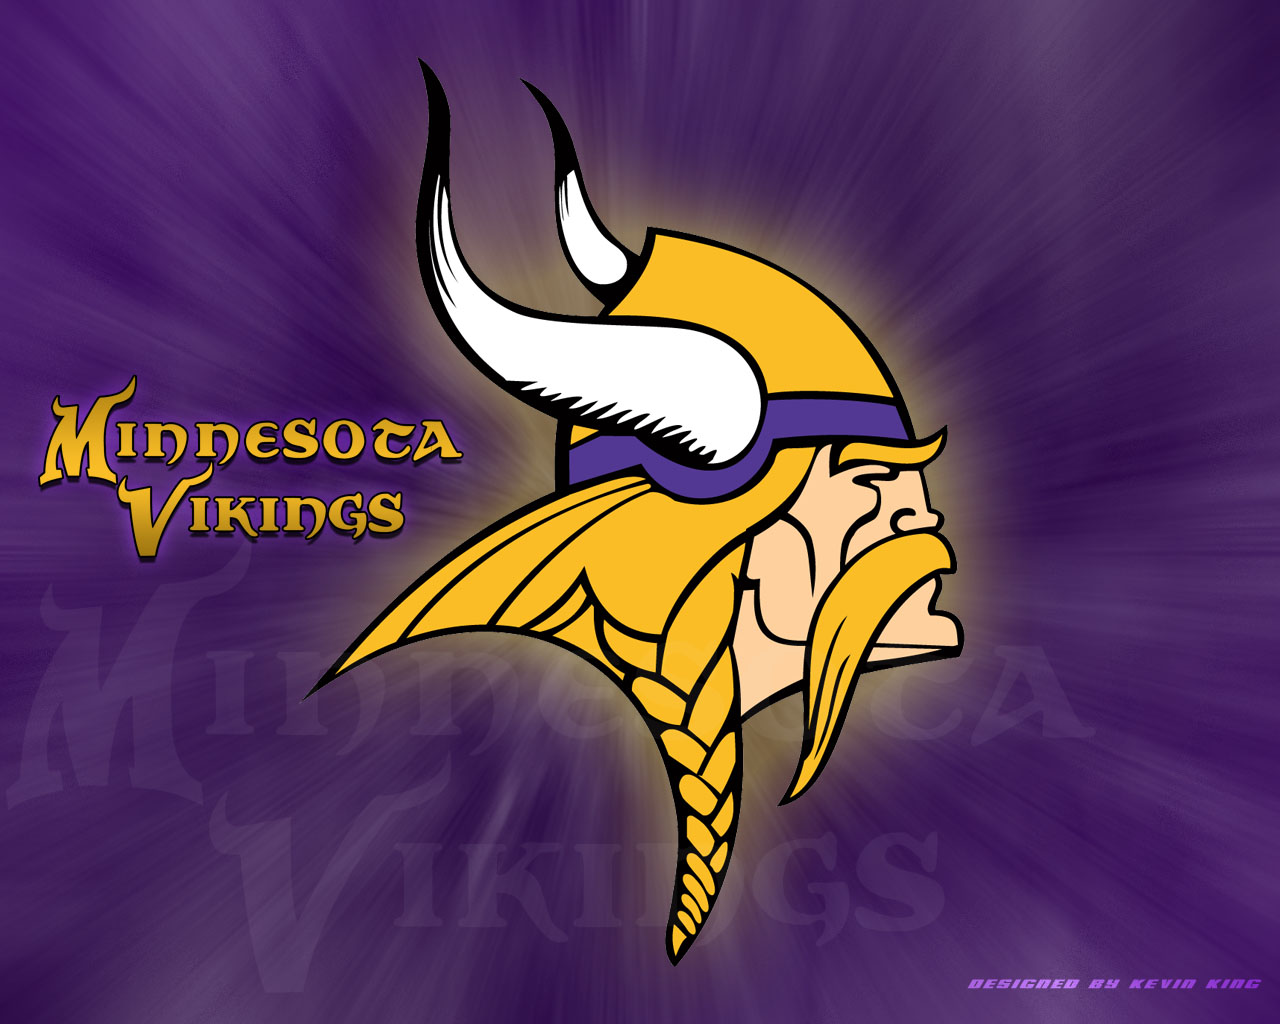 Minnesota Vikings Wallpaper And Screensaver